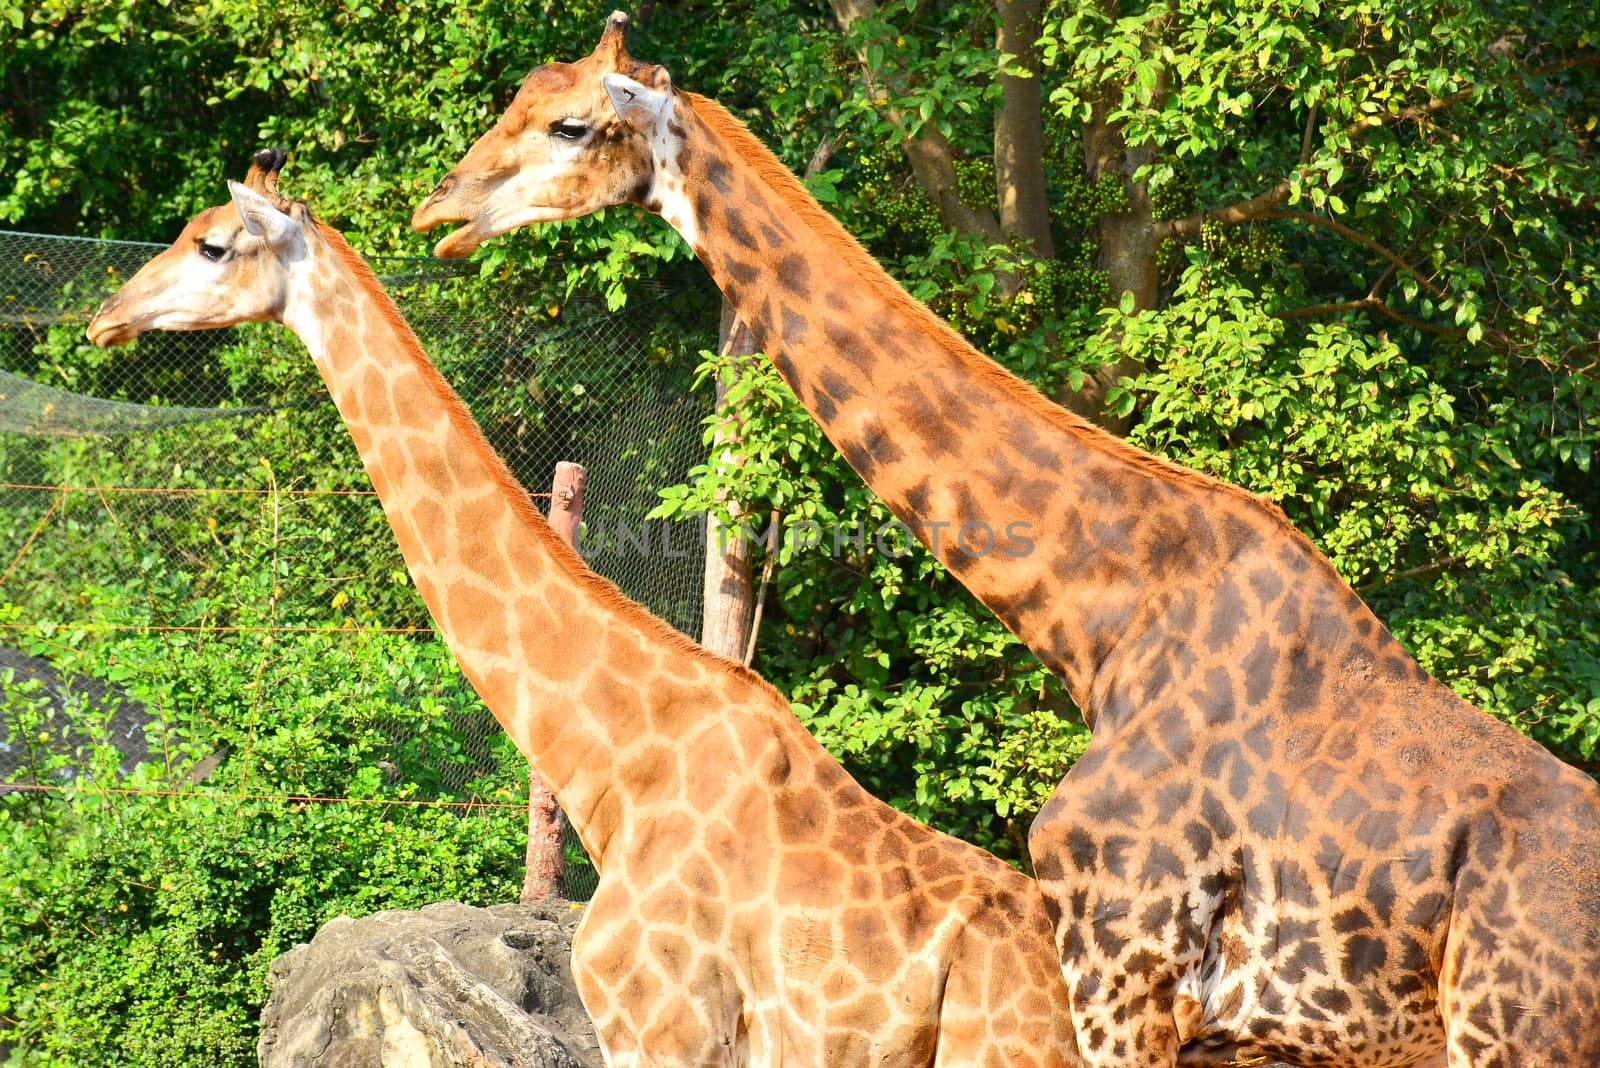 BANGKOK, TH - DEC 13: Giraffe at Dusit Zoo on December 13, 2016 in Khao Din Park, Bangkok, Thailand. Dusit Zoo is the oldest zoo in Bangkok, Thailand.